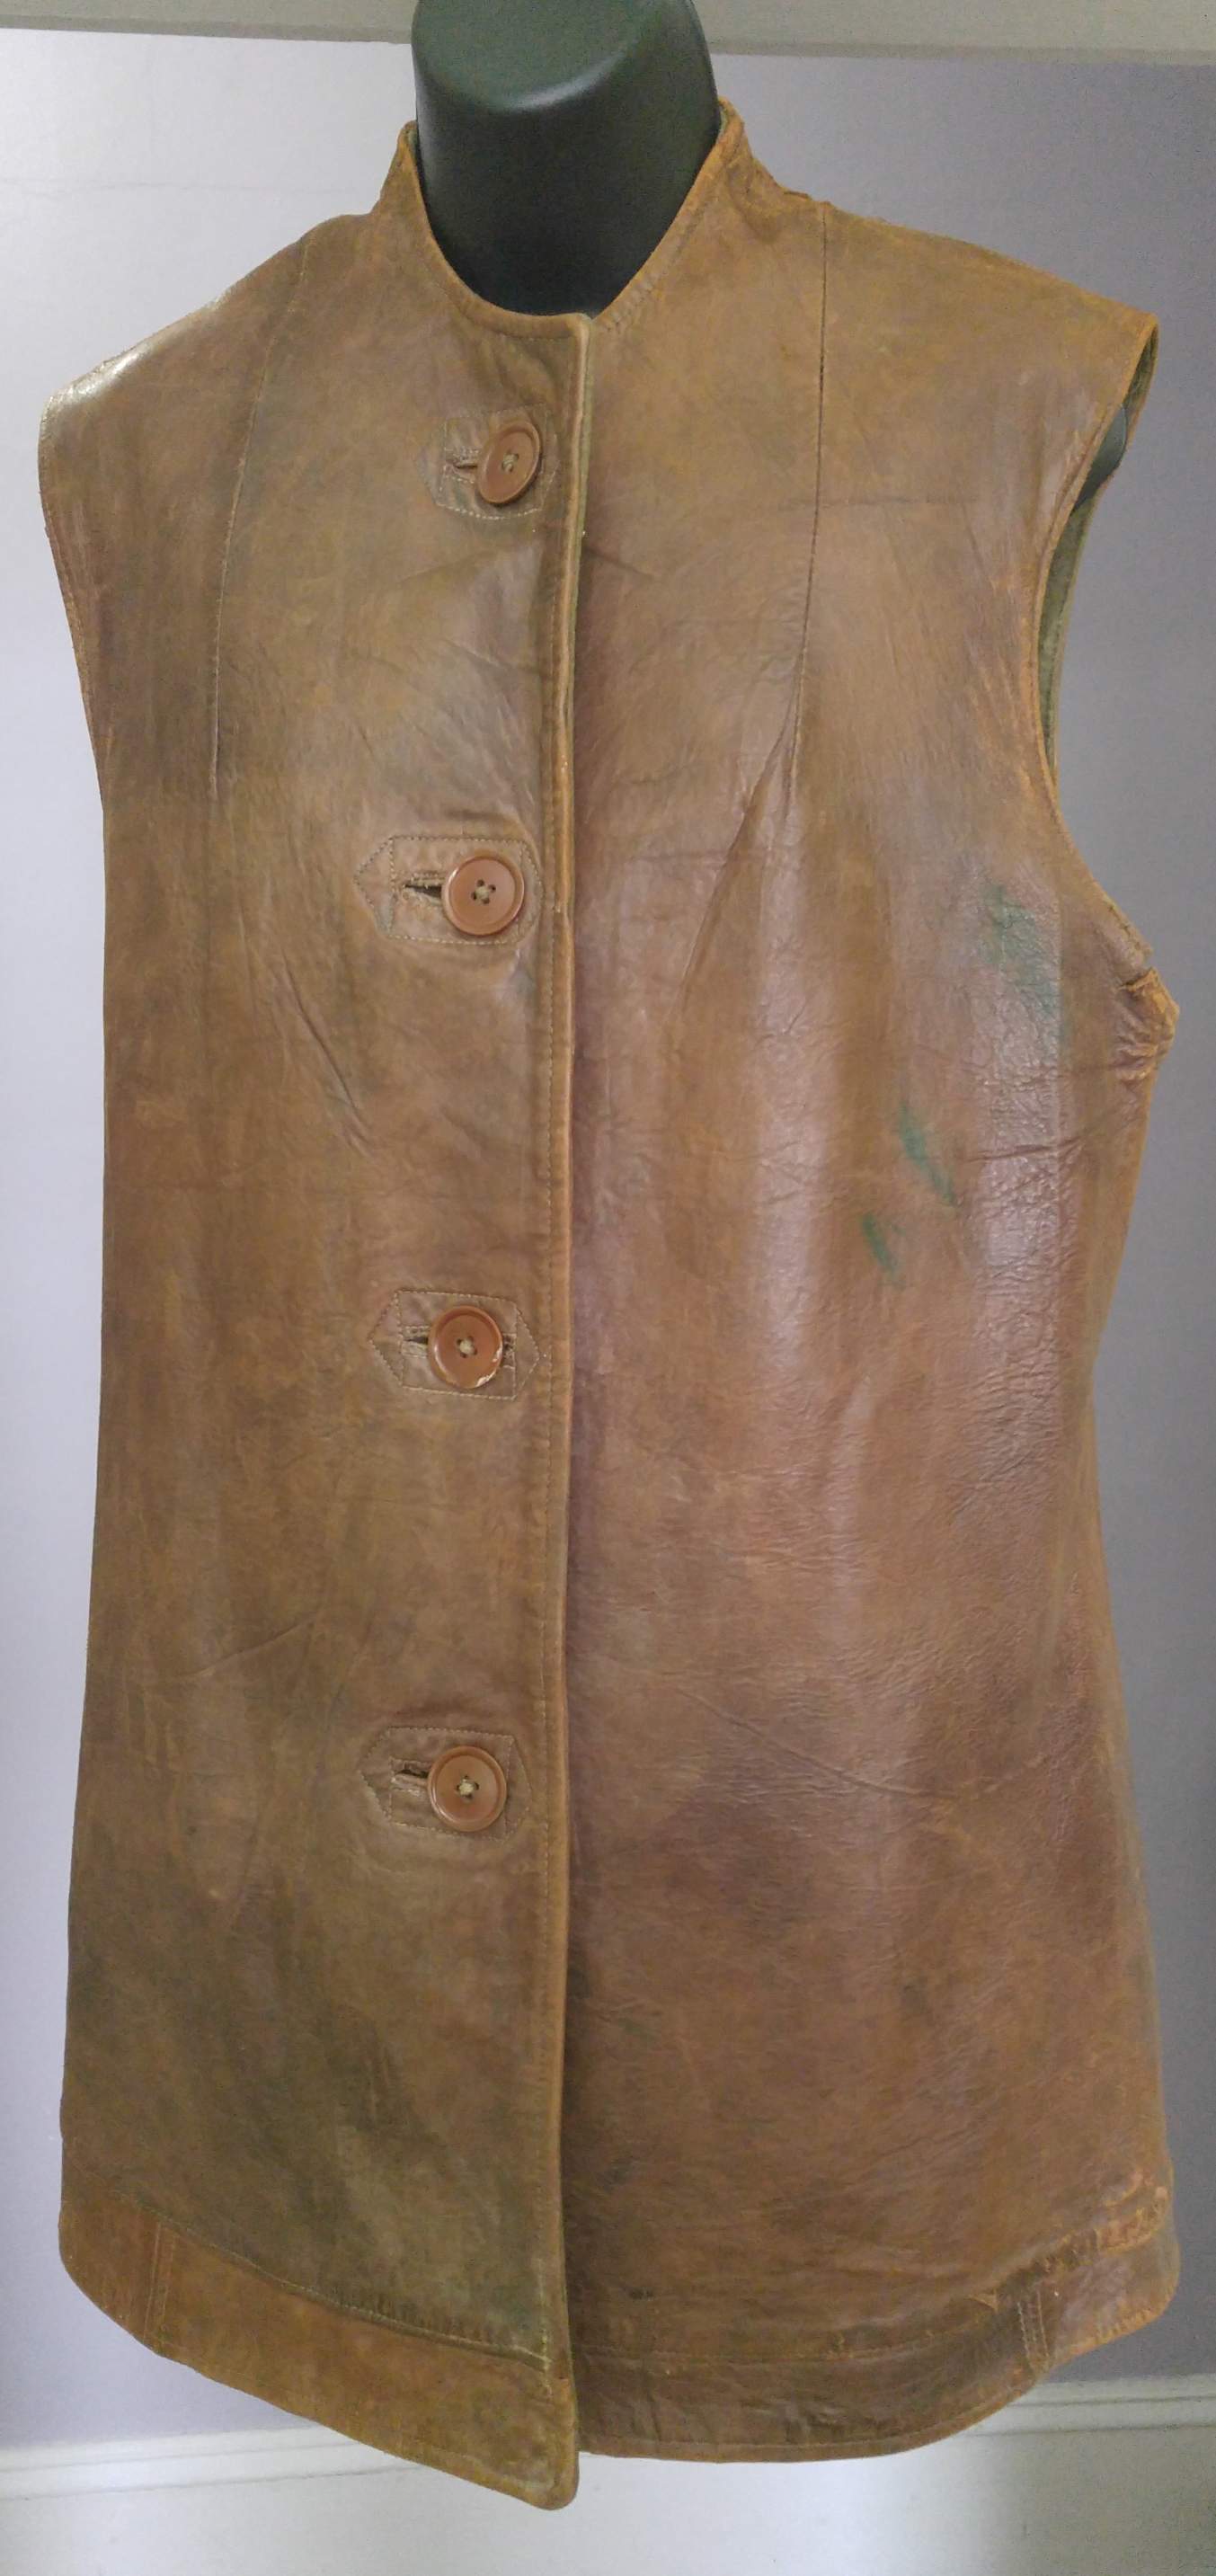 Ladies (ATS) leather jerkin 1st pattern.